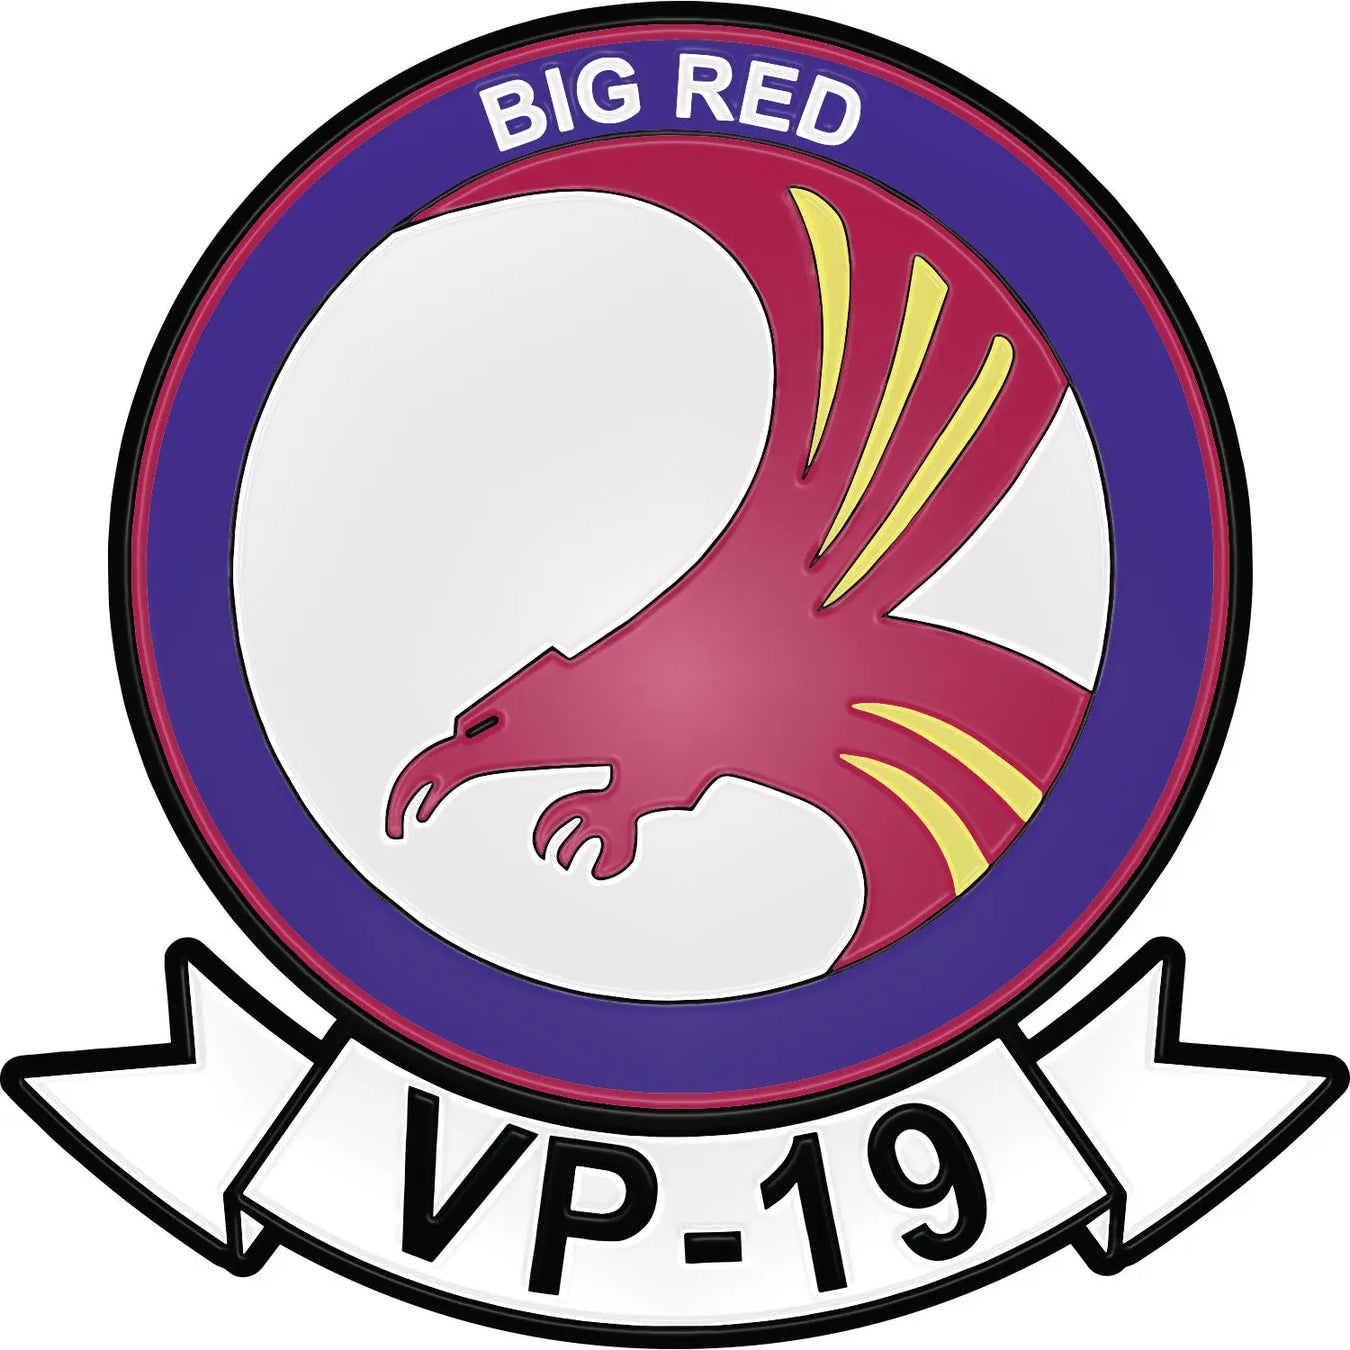 Patrol Squadron 19 (VP-19)